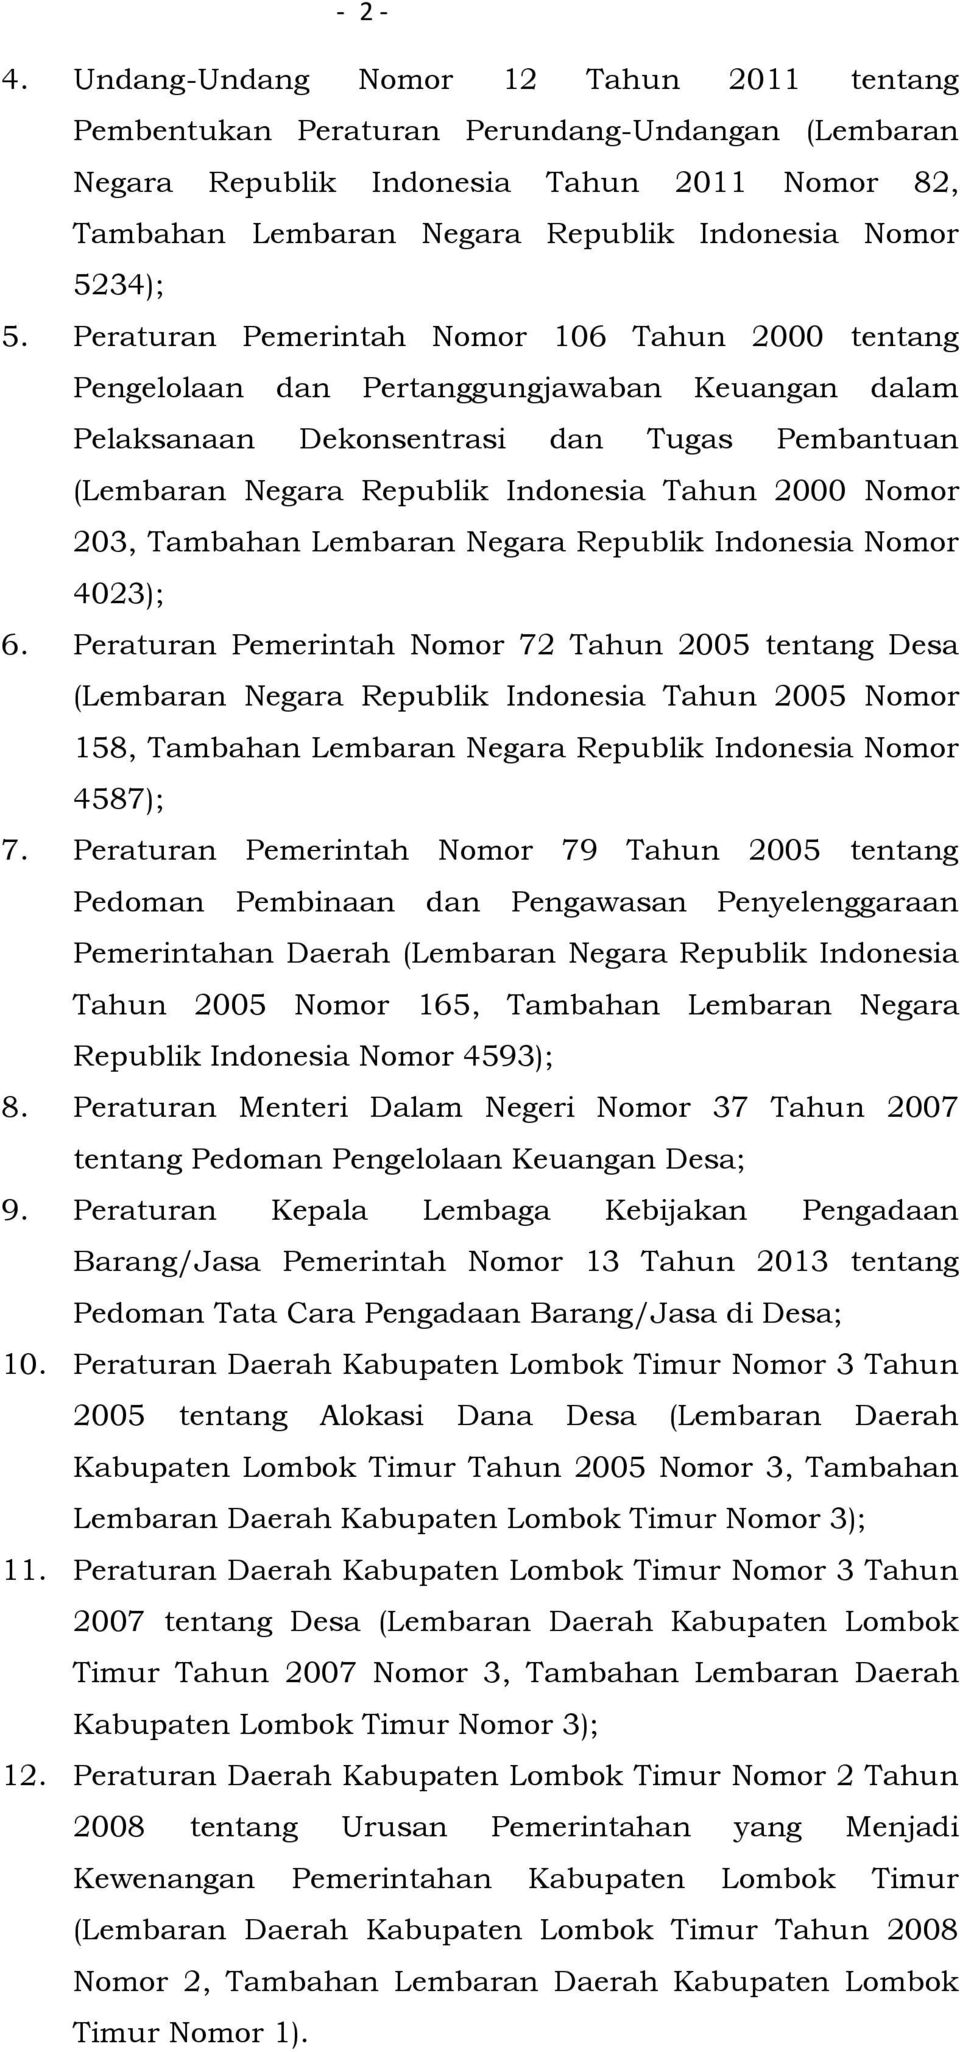 Peraturan Pemerintah Nomor 106 Tahun 2000 tentang Pengelolaan dan Pertanggungjawaban Keuangan dalam Pelaksanaan Dekonsentrasi dan Tugas Pembantuan (Lembaran Negara Republik Indonesia Tahun 2000 Nomor